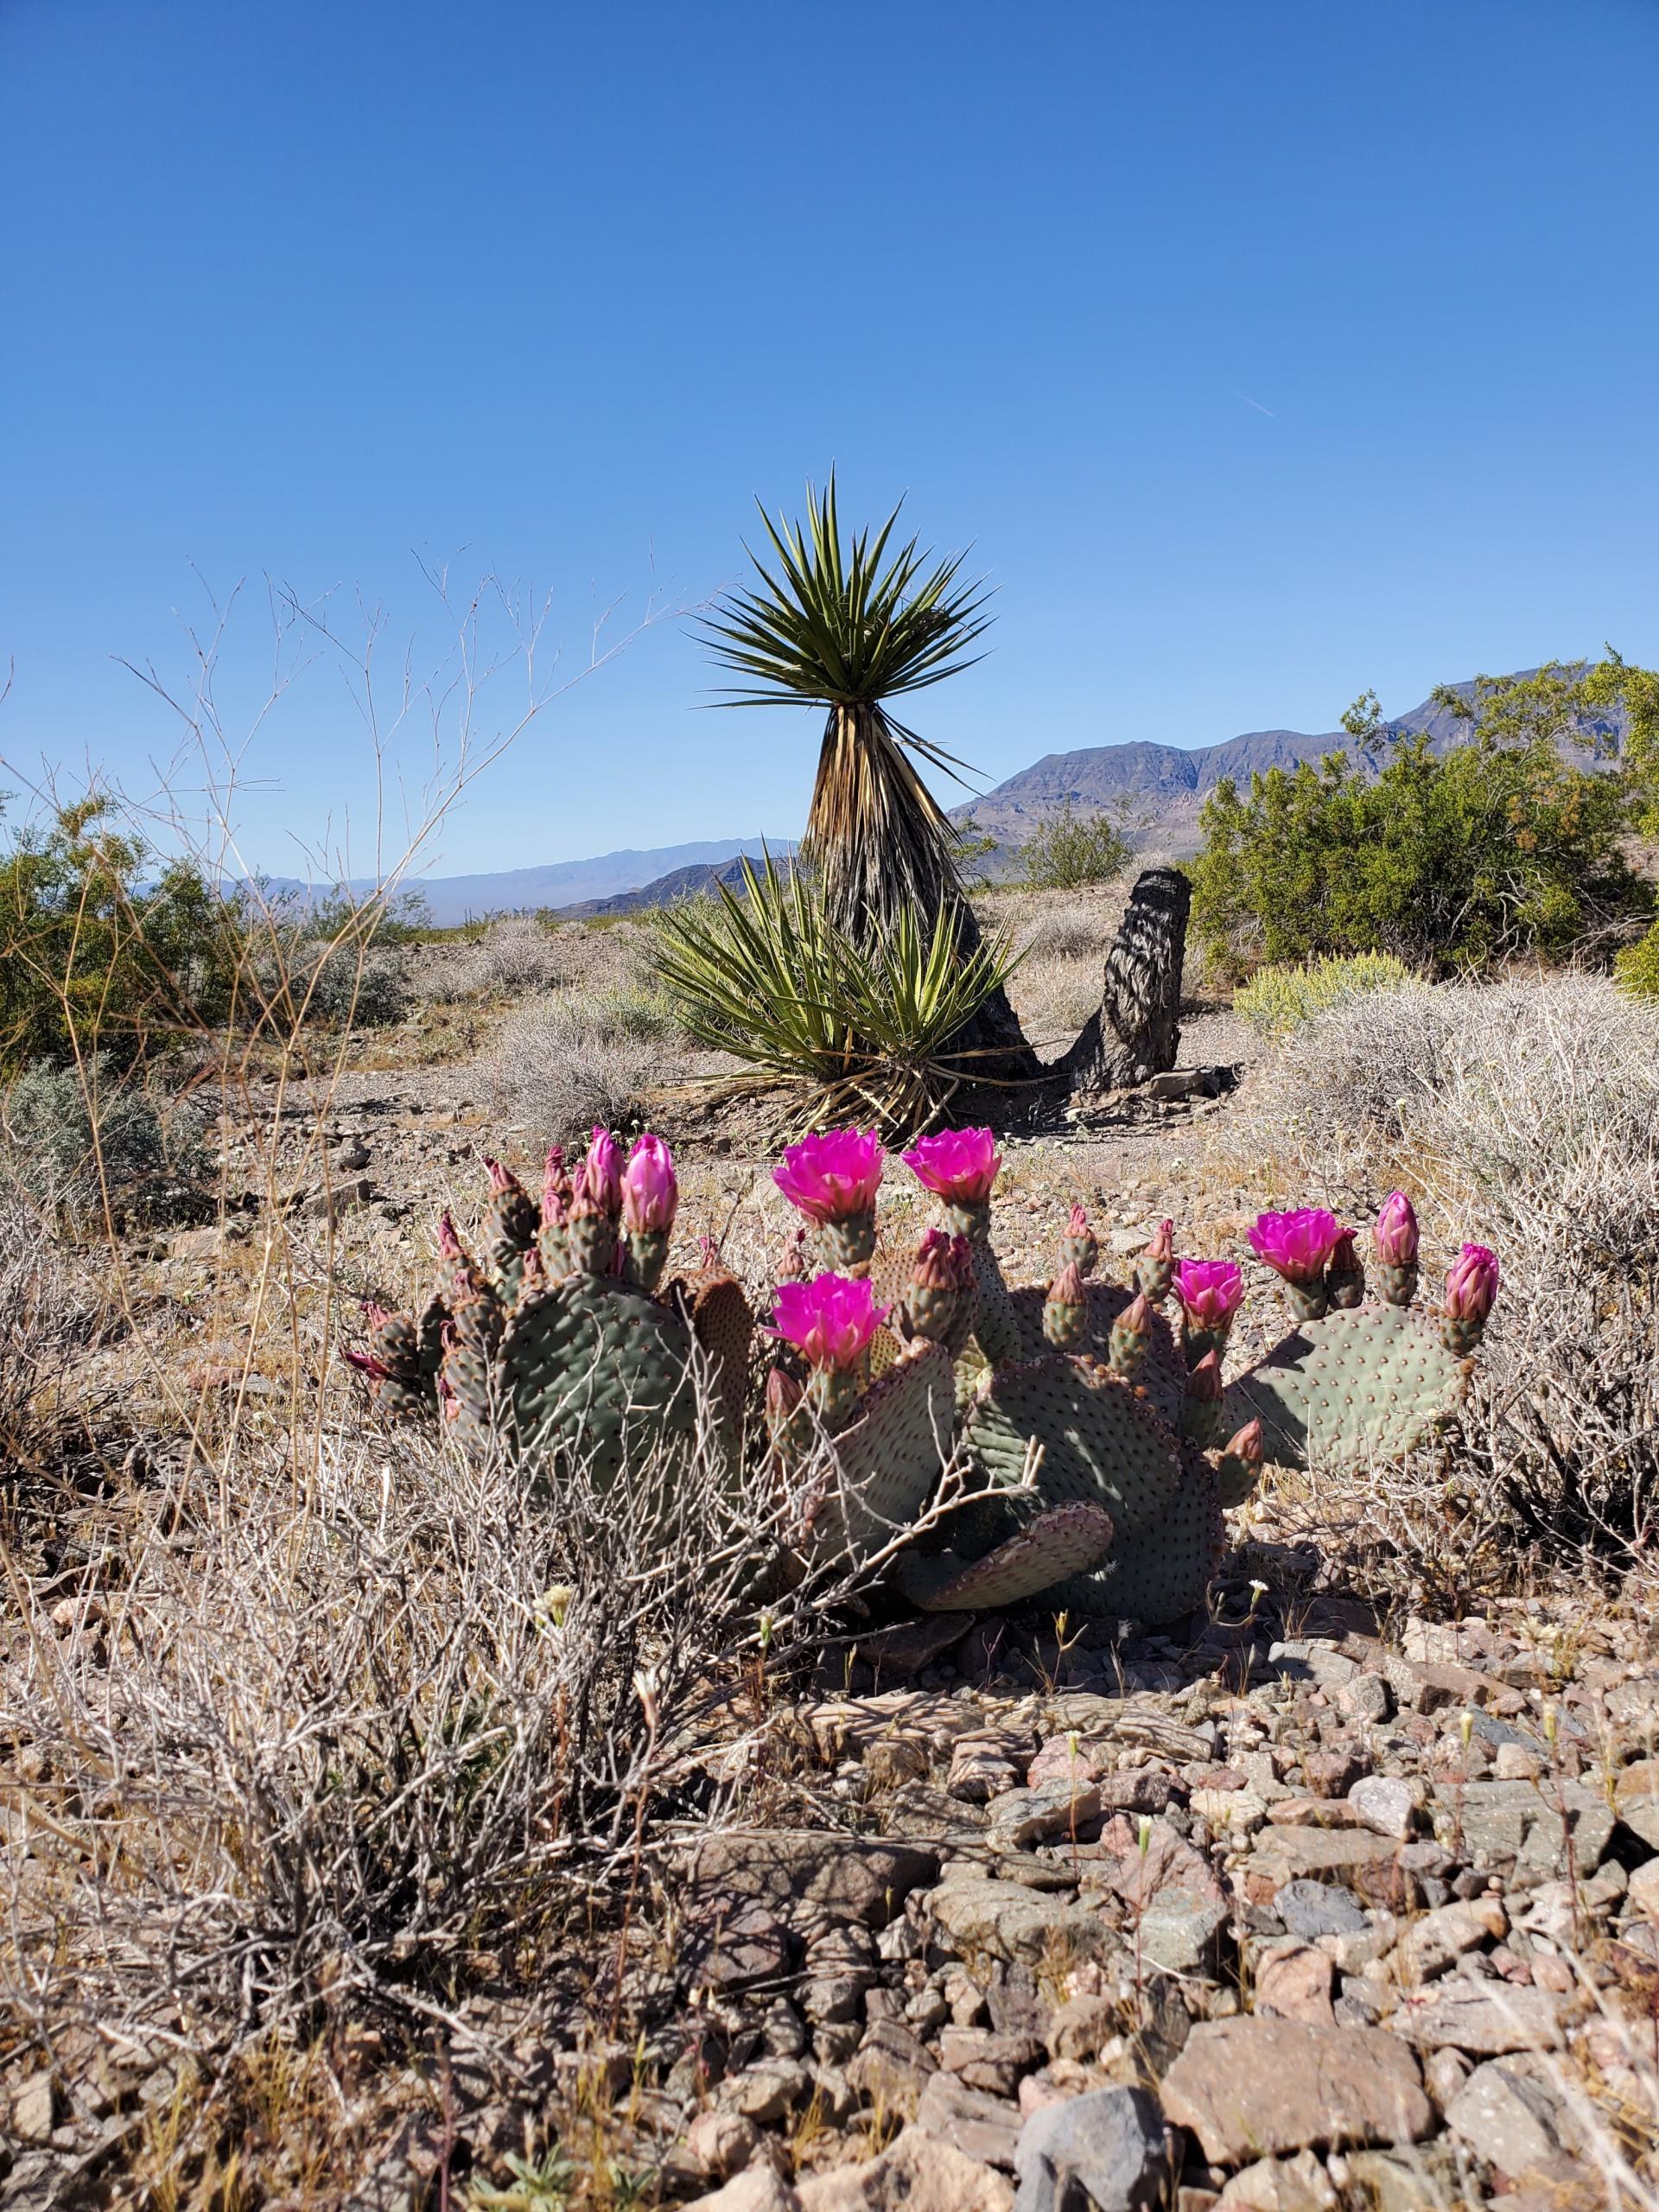 desert landscape with cactus